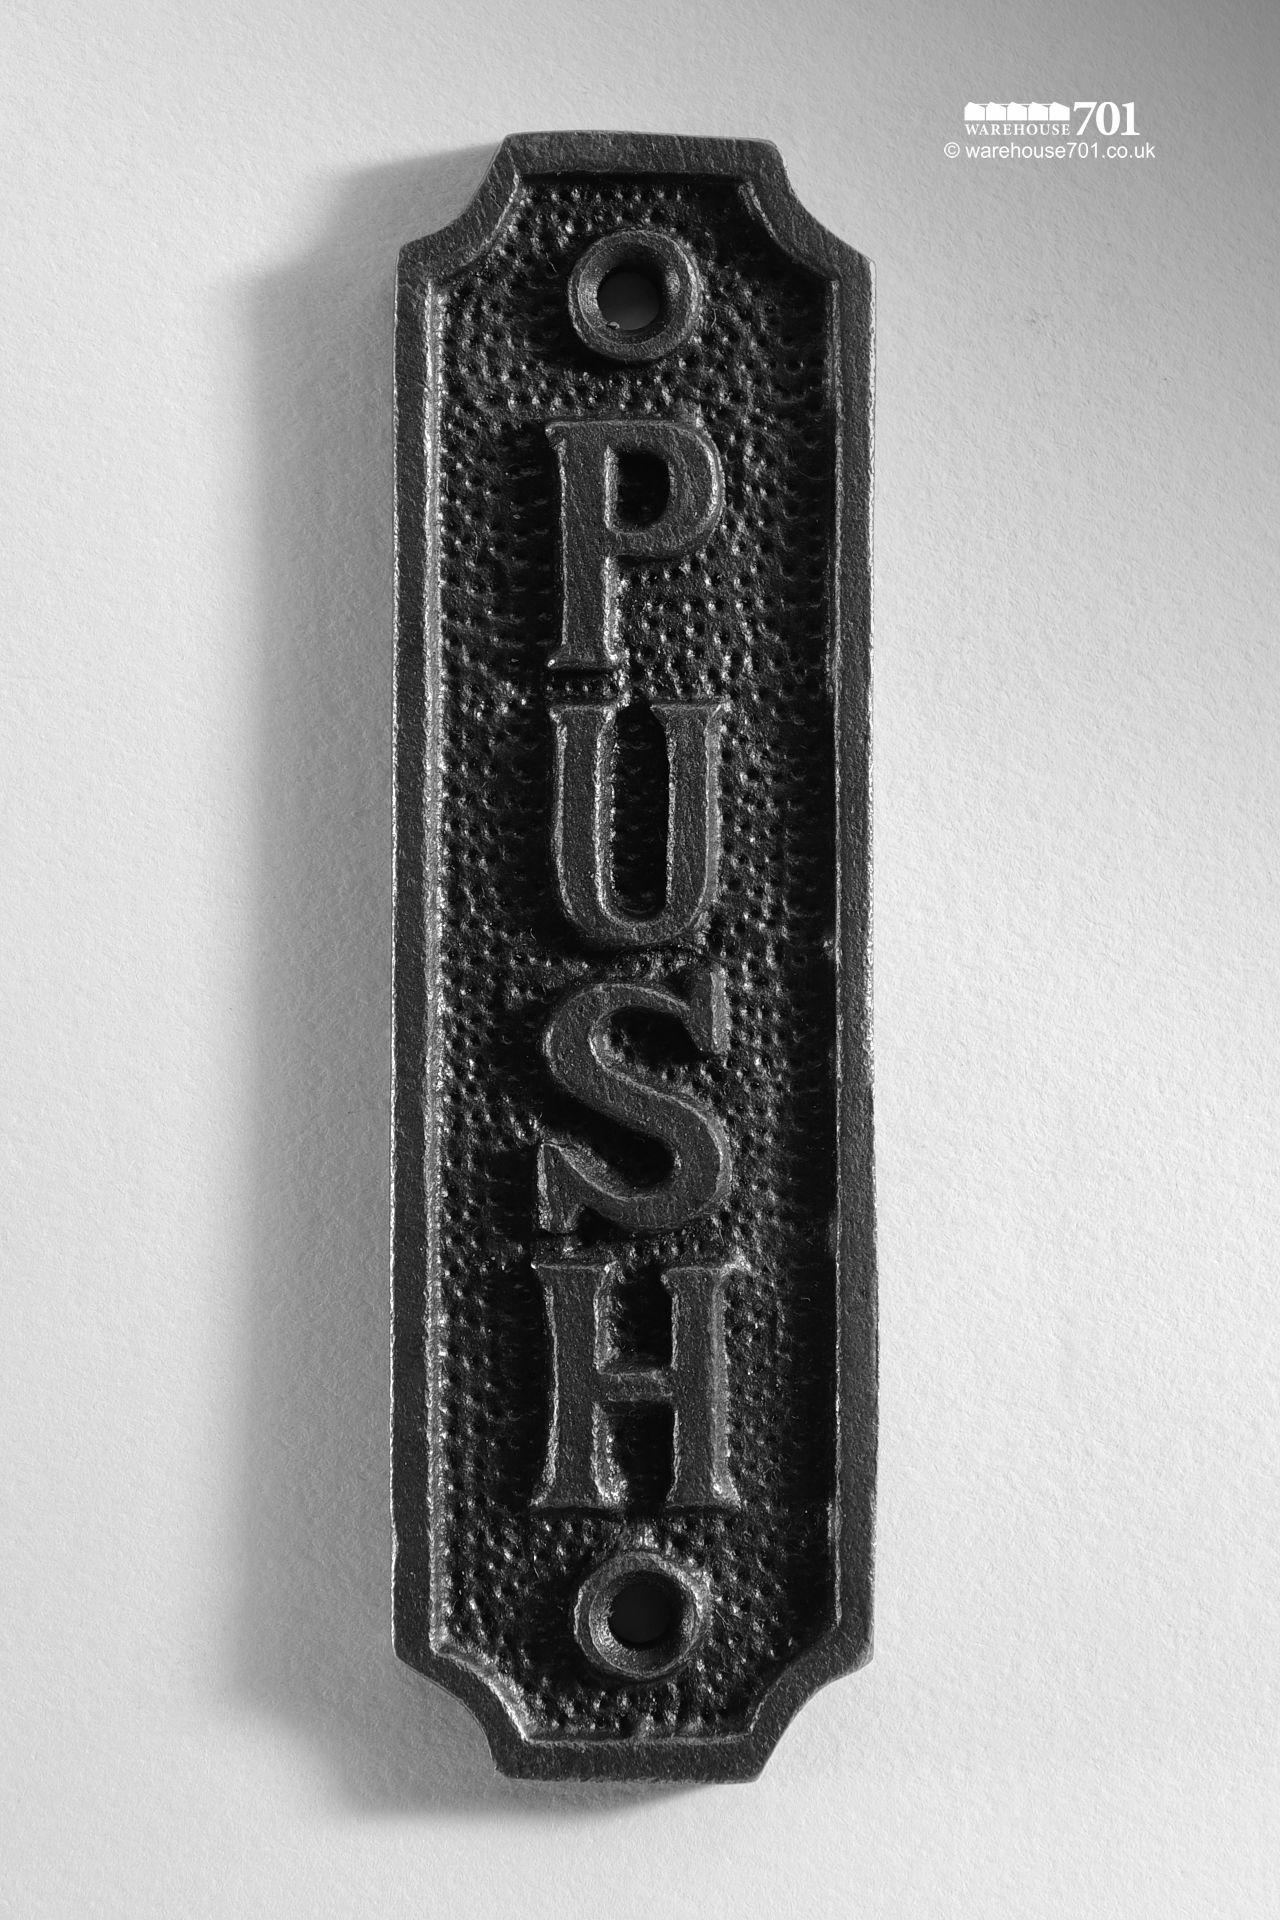 New Cast Iron Push Sign